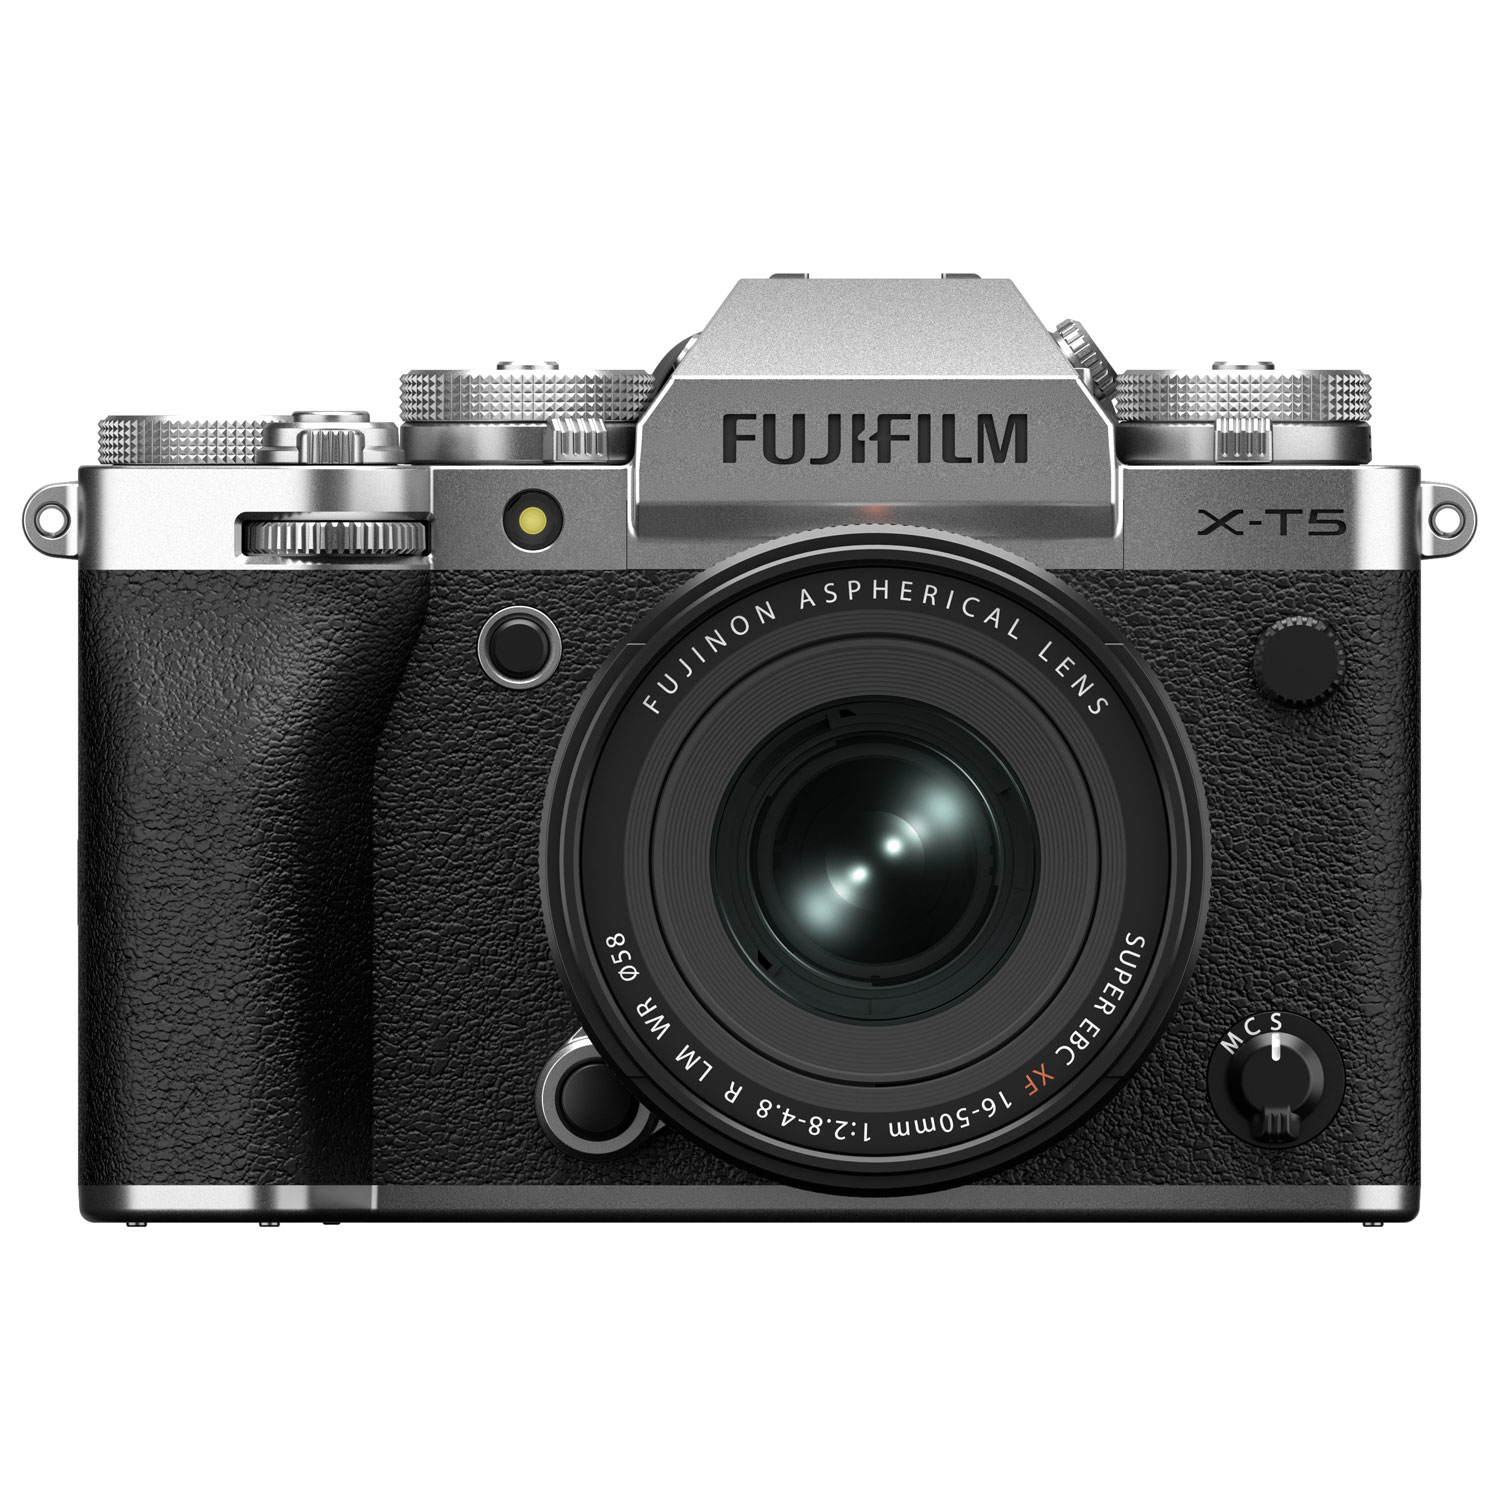 Fujifilm X-T5 Mirrorless Camera with 16-50mm Lens Kit - Silver